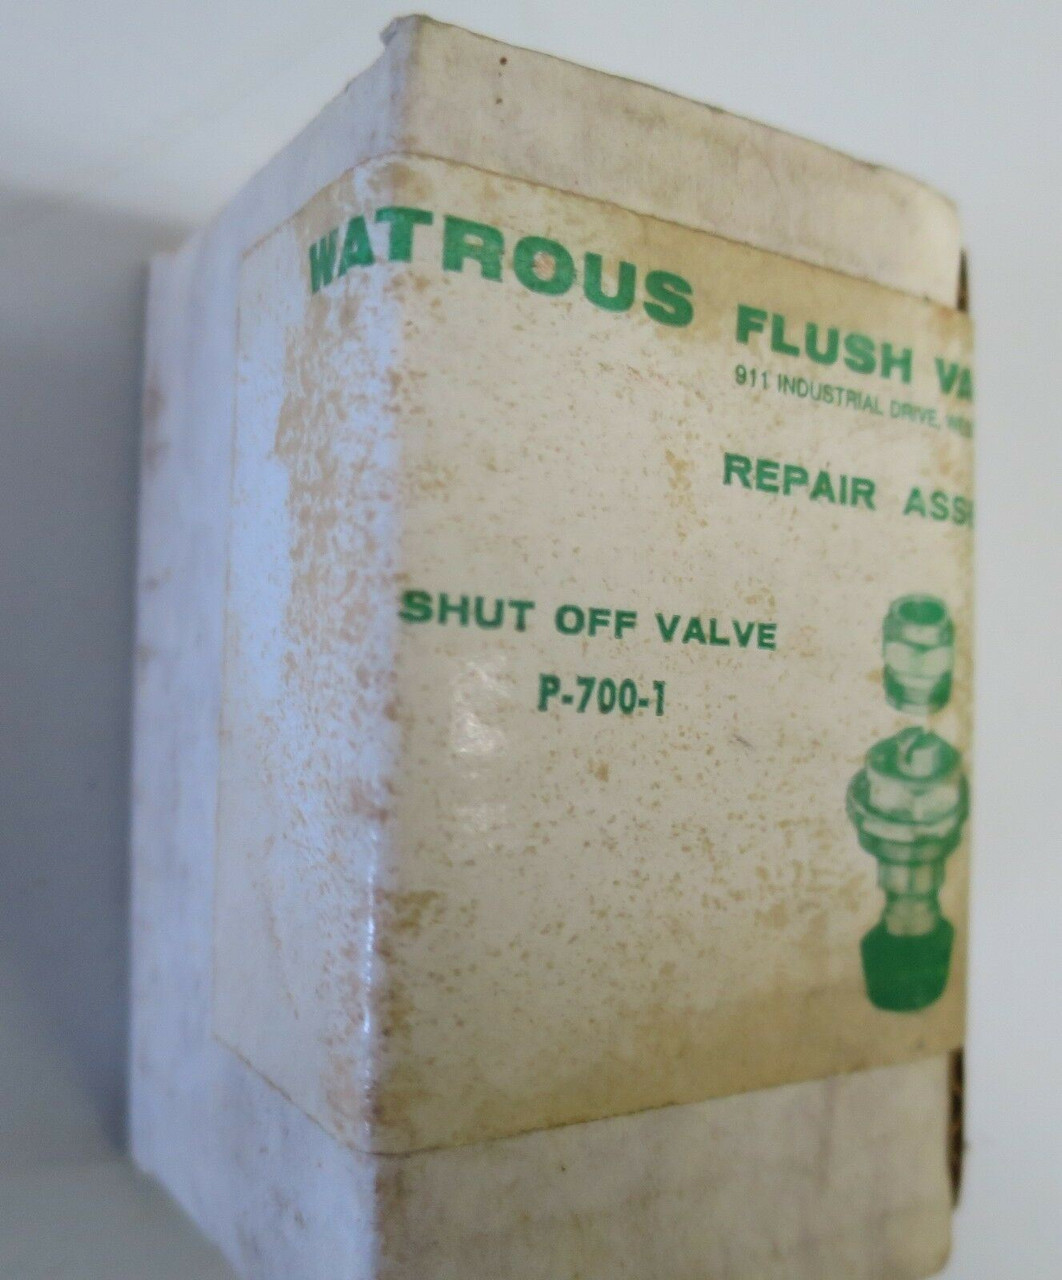 Watrous Flush Valve Repair Assembly Shut Off Valve P-700-1